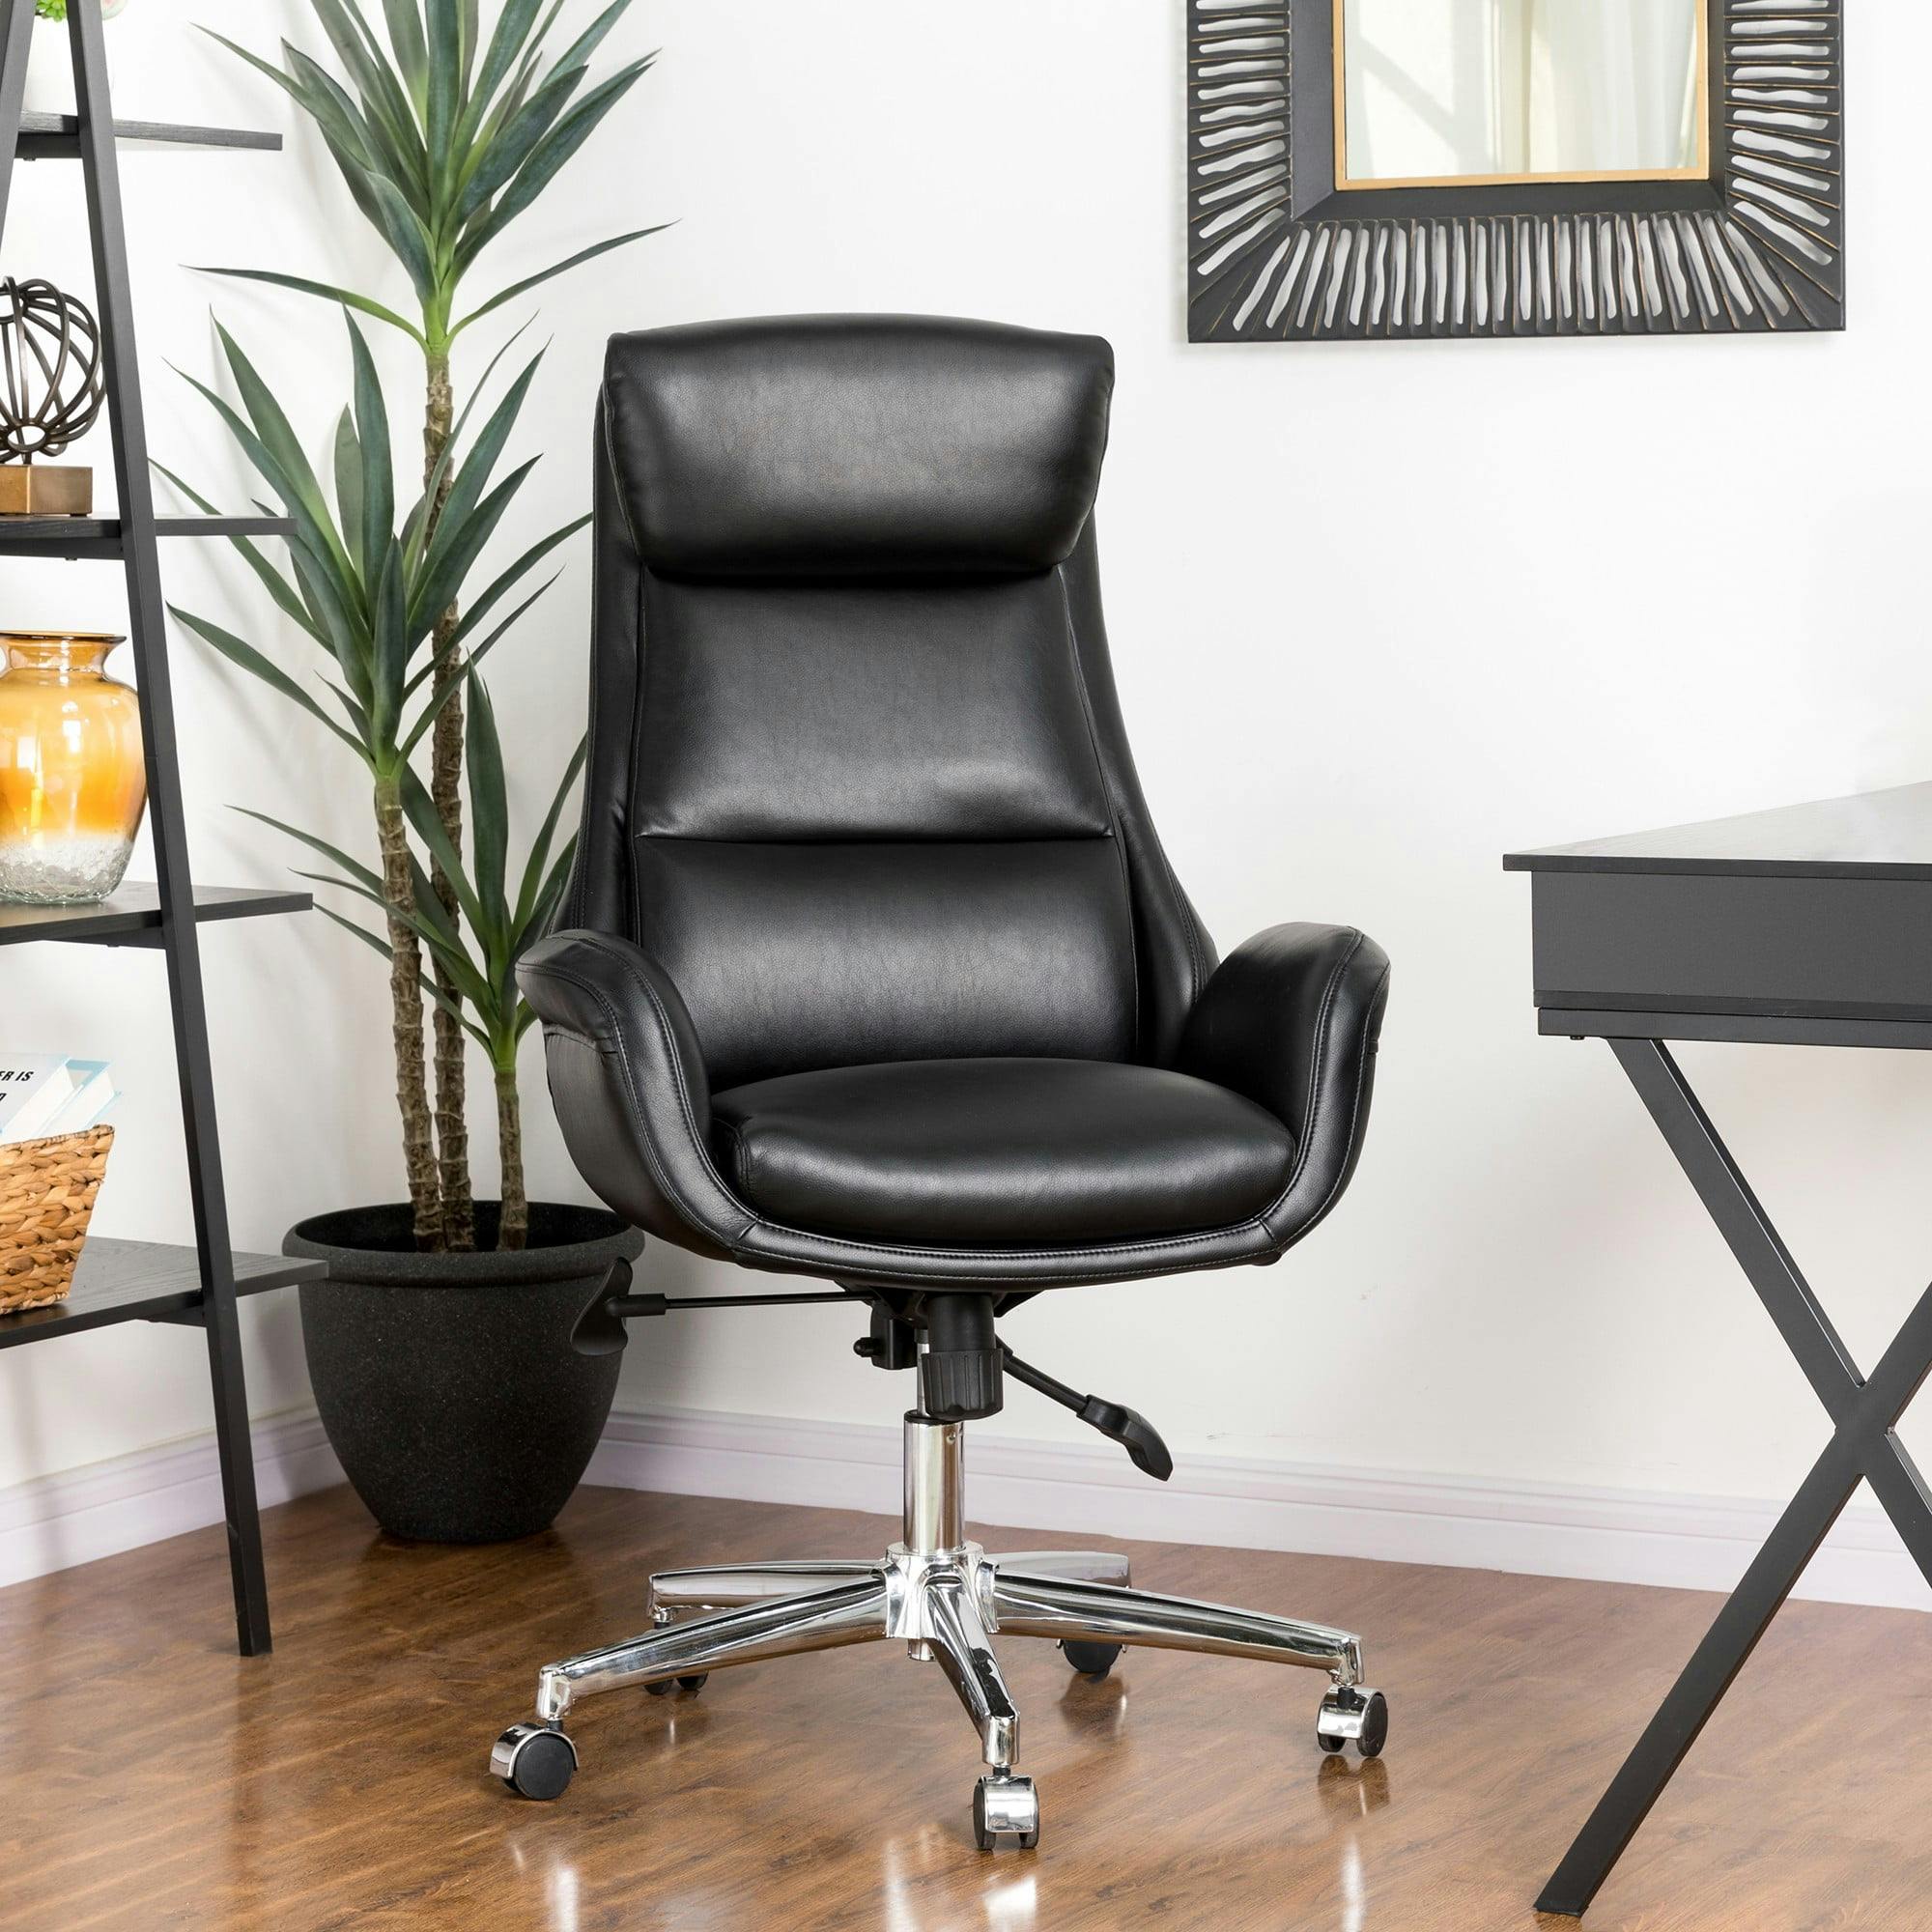 Ergonomic Executive High-Back Swivel Chair in Black Leatherette